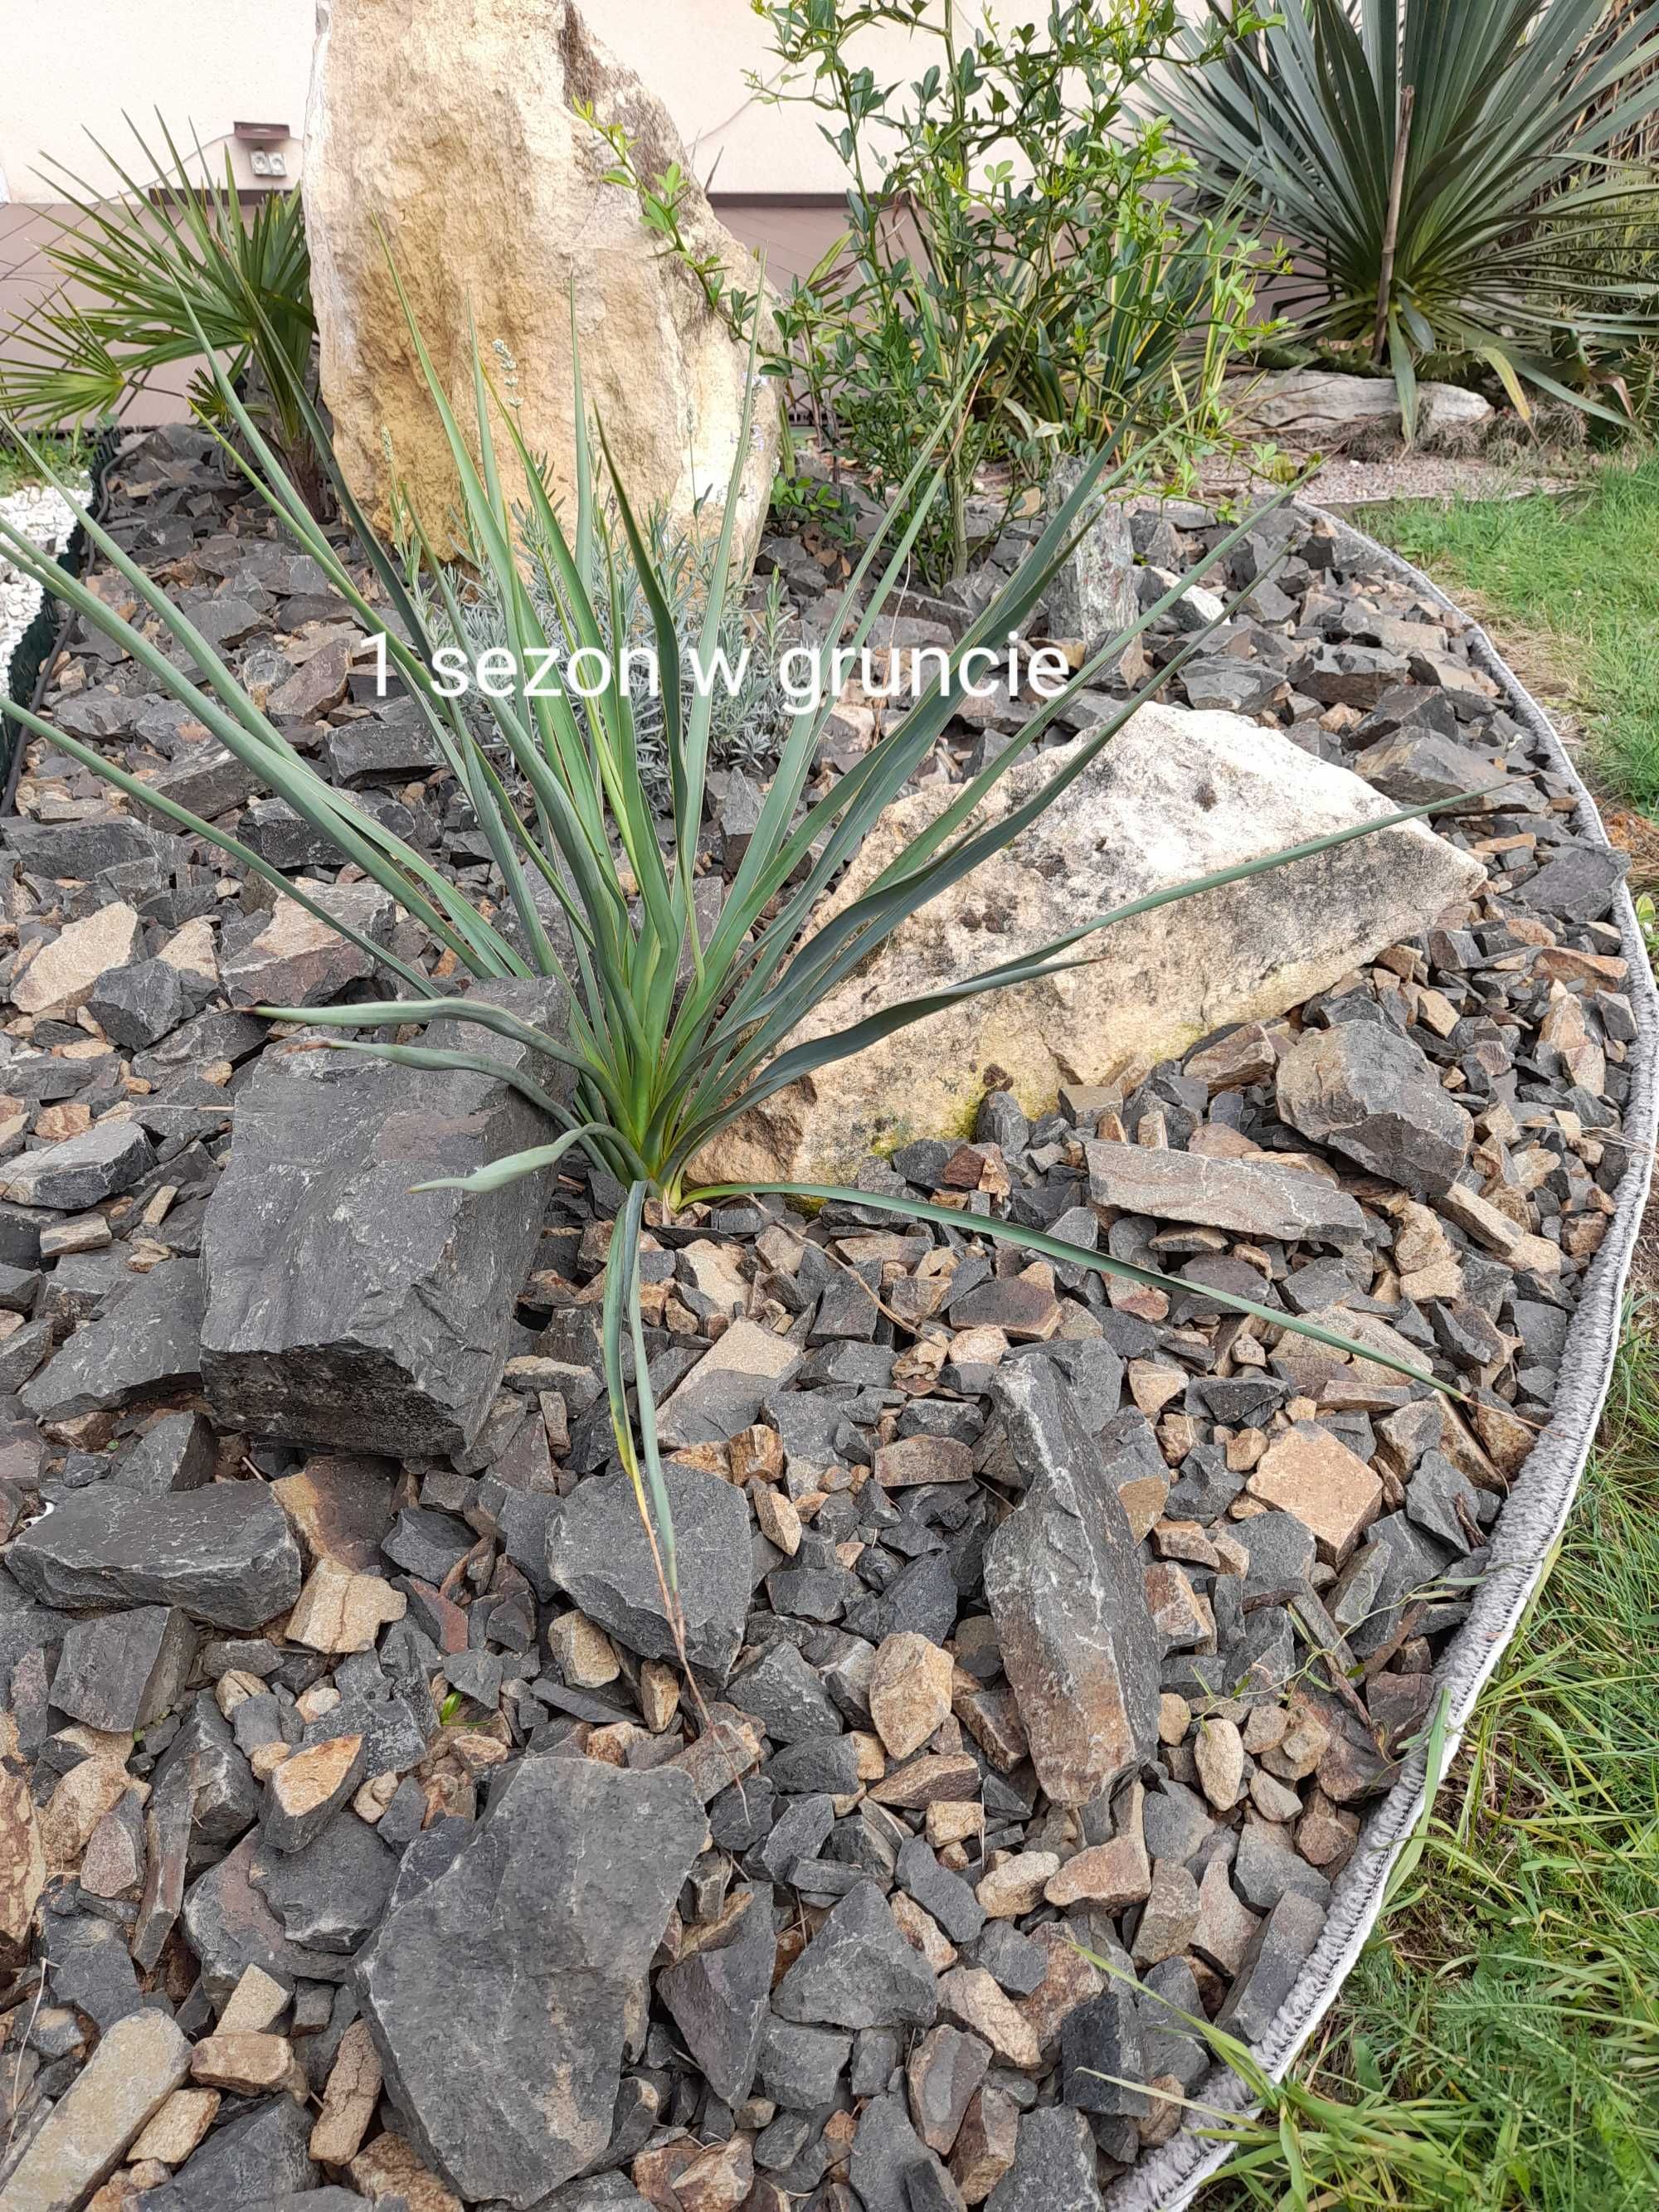 JUKA Yucca tworząca pień mrozoodporna -26 hybrydy szybkorosnąca